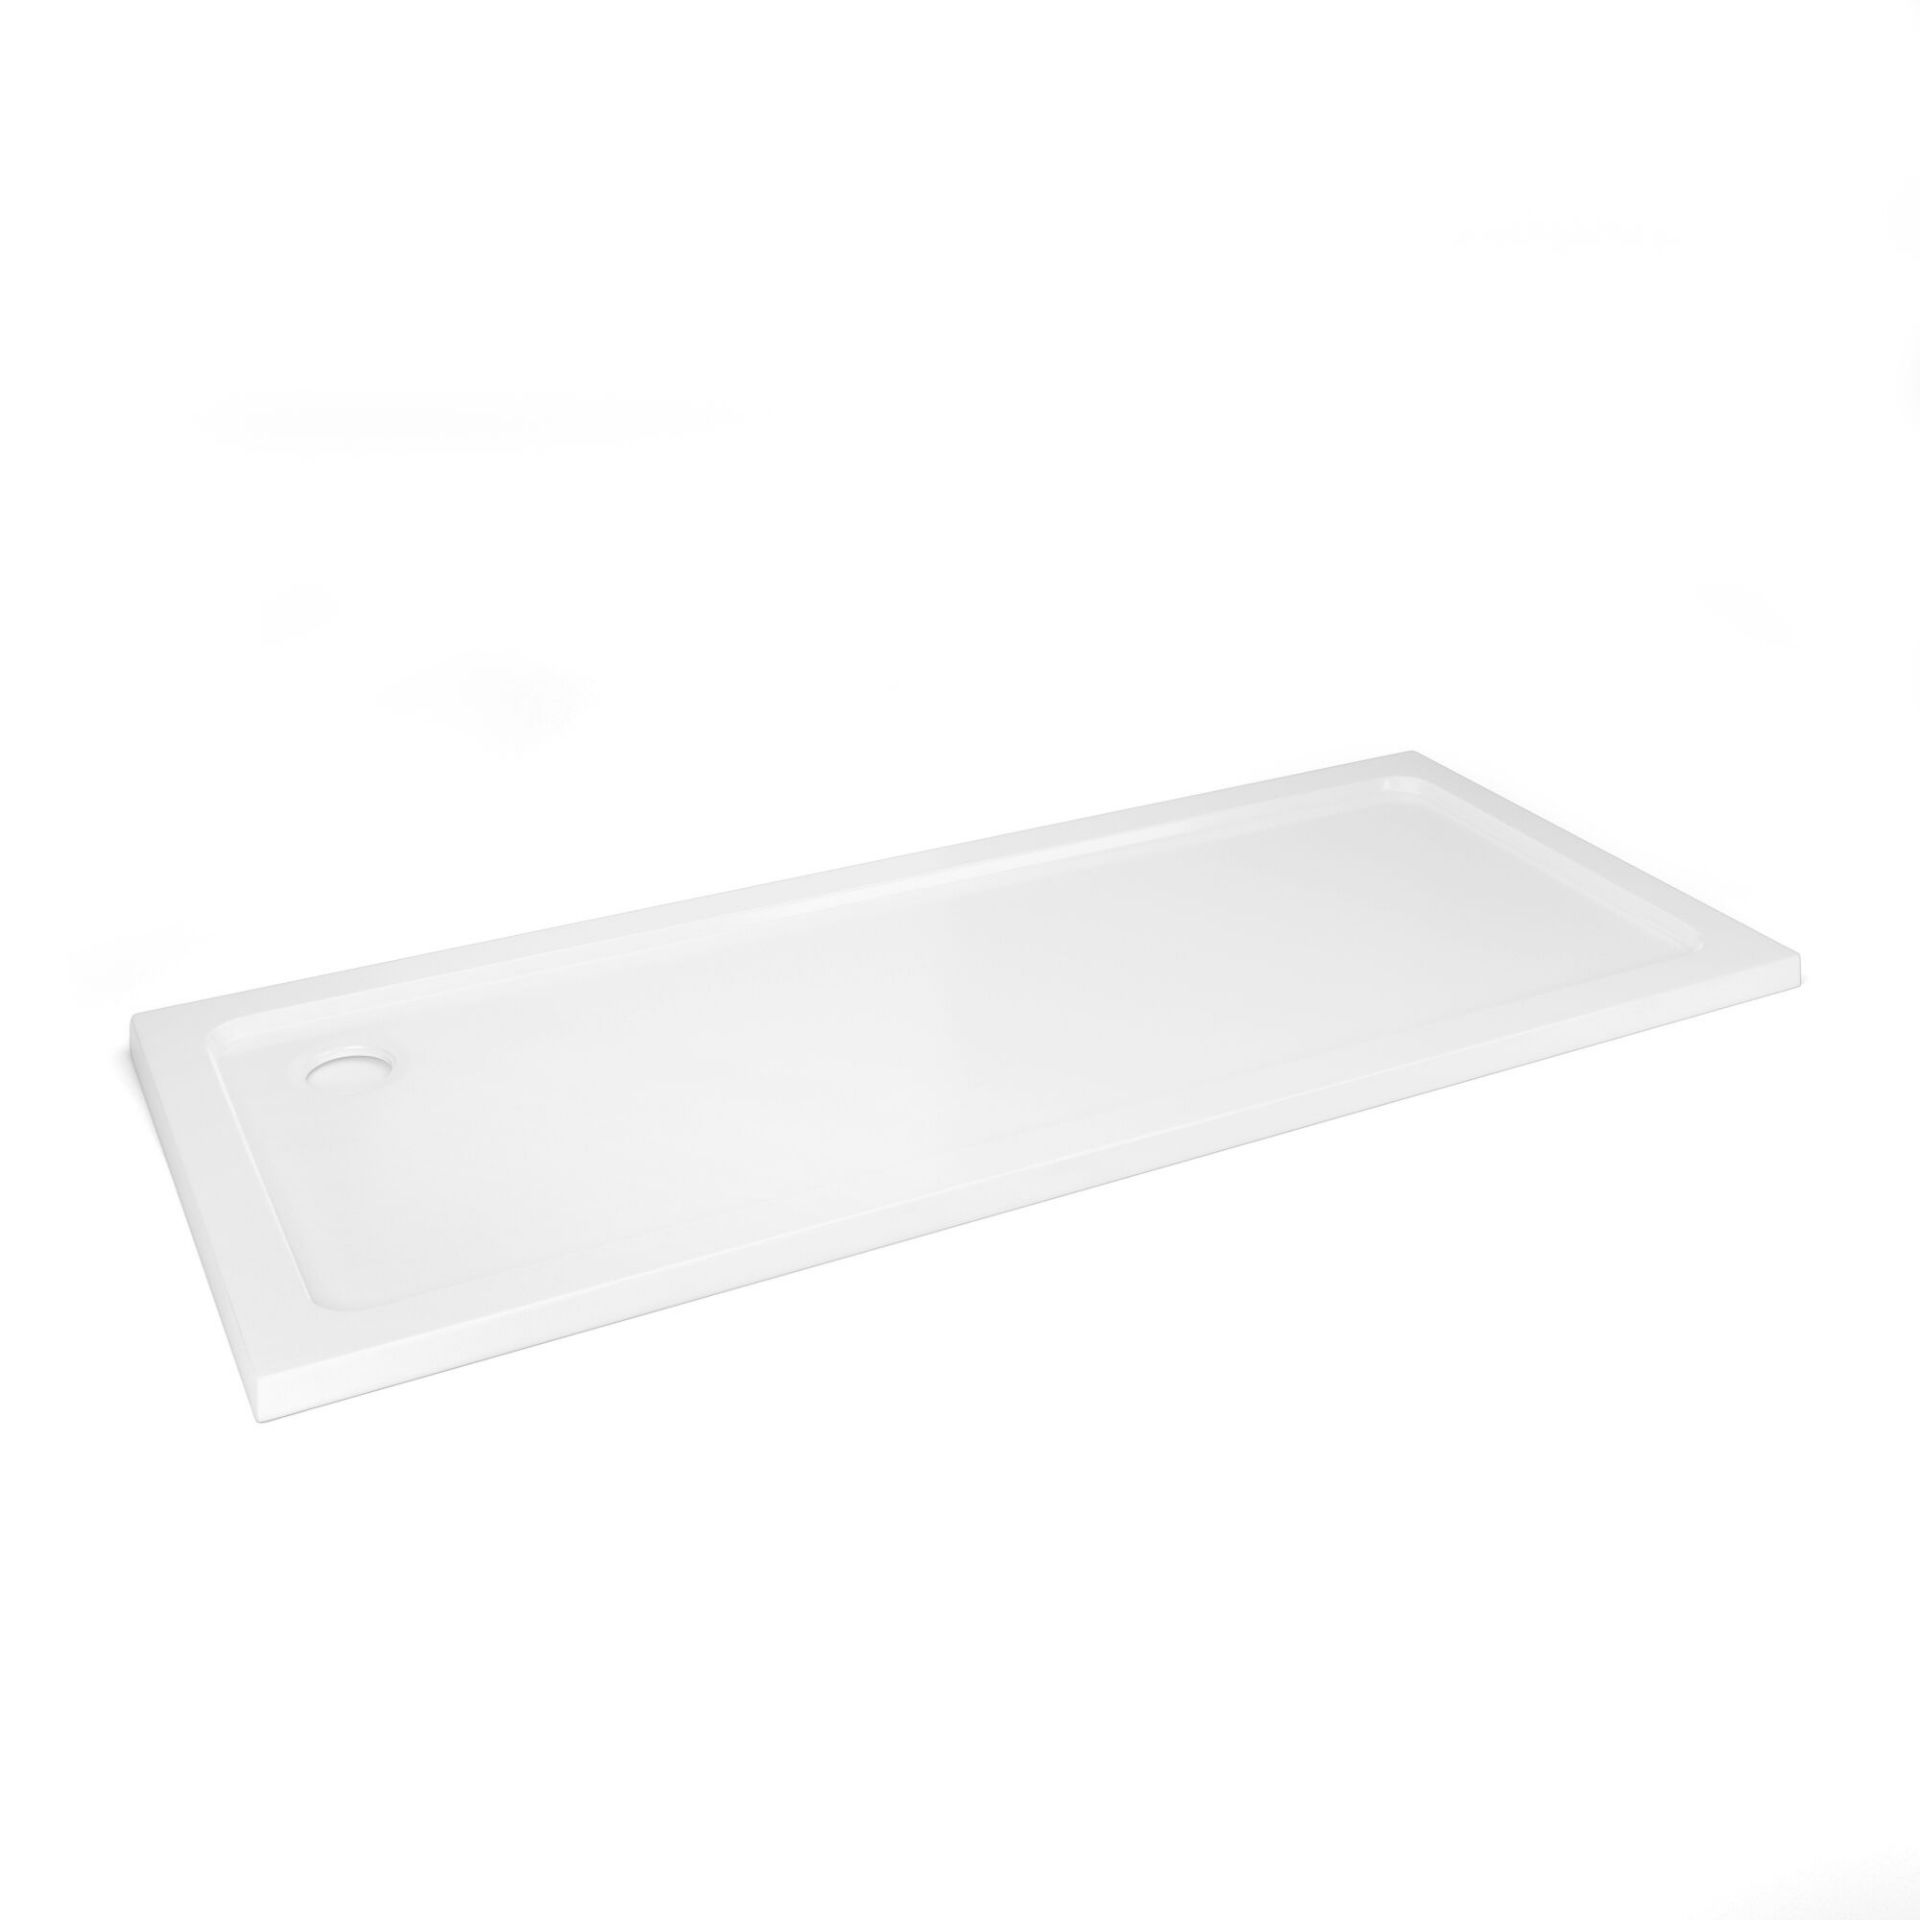 (OS275) 1700x700mm Rectangular Ultra Slim Stone Shower Tray. Low profile ultra slim design Gel